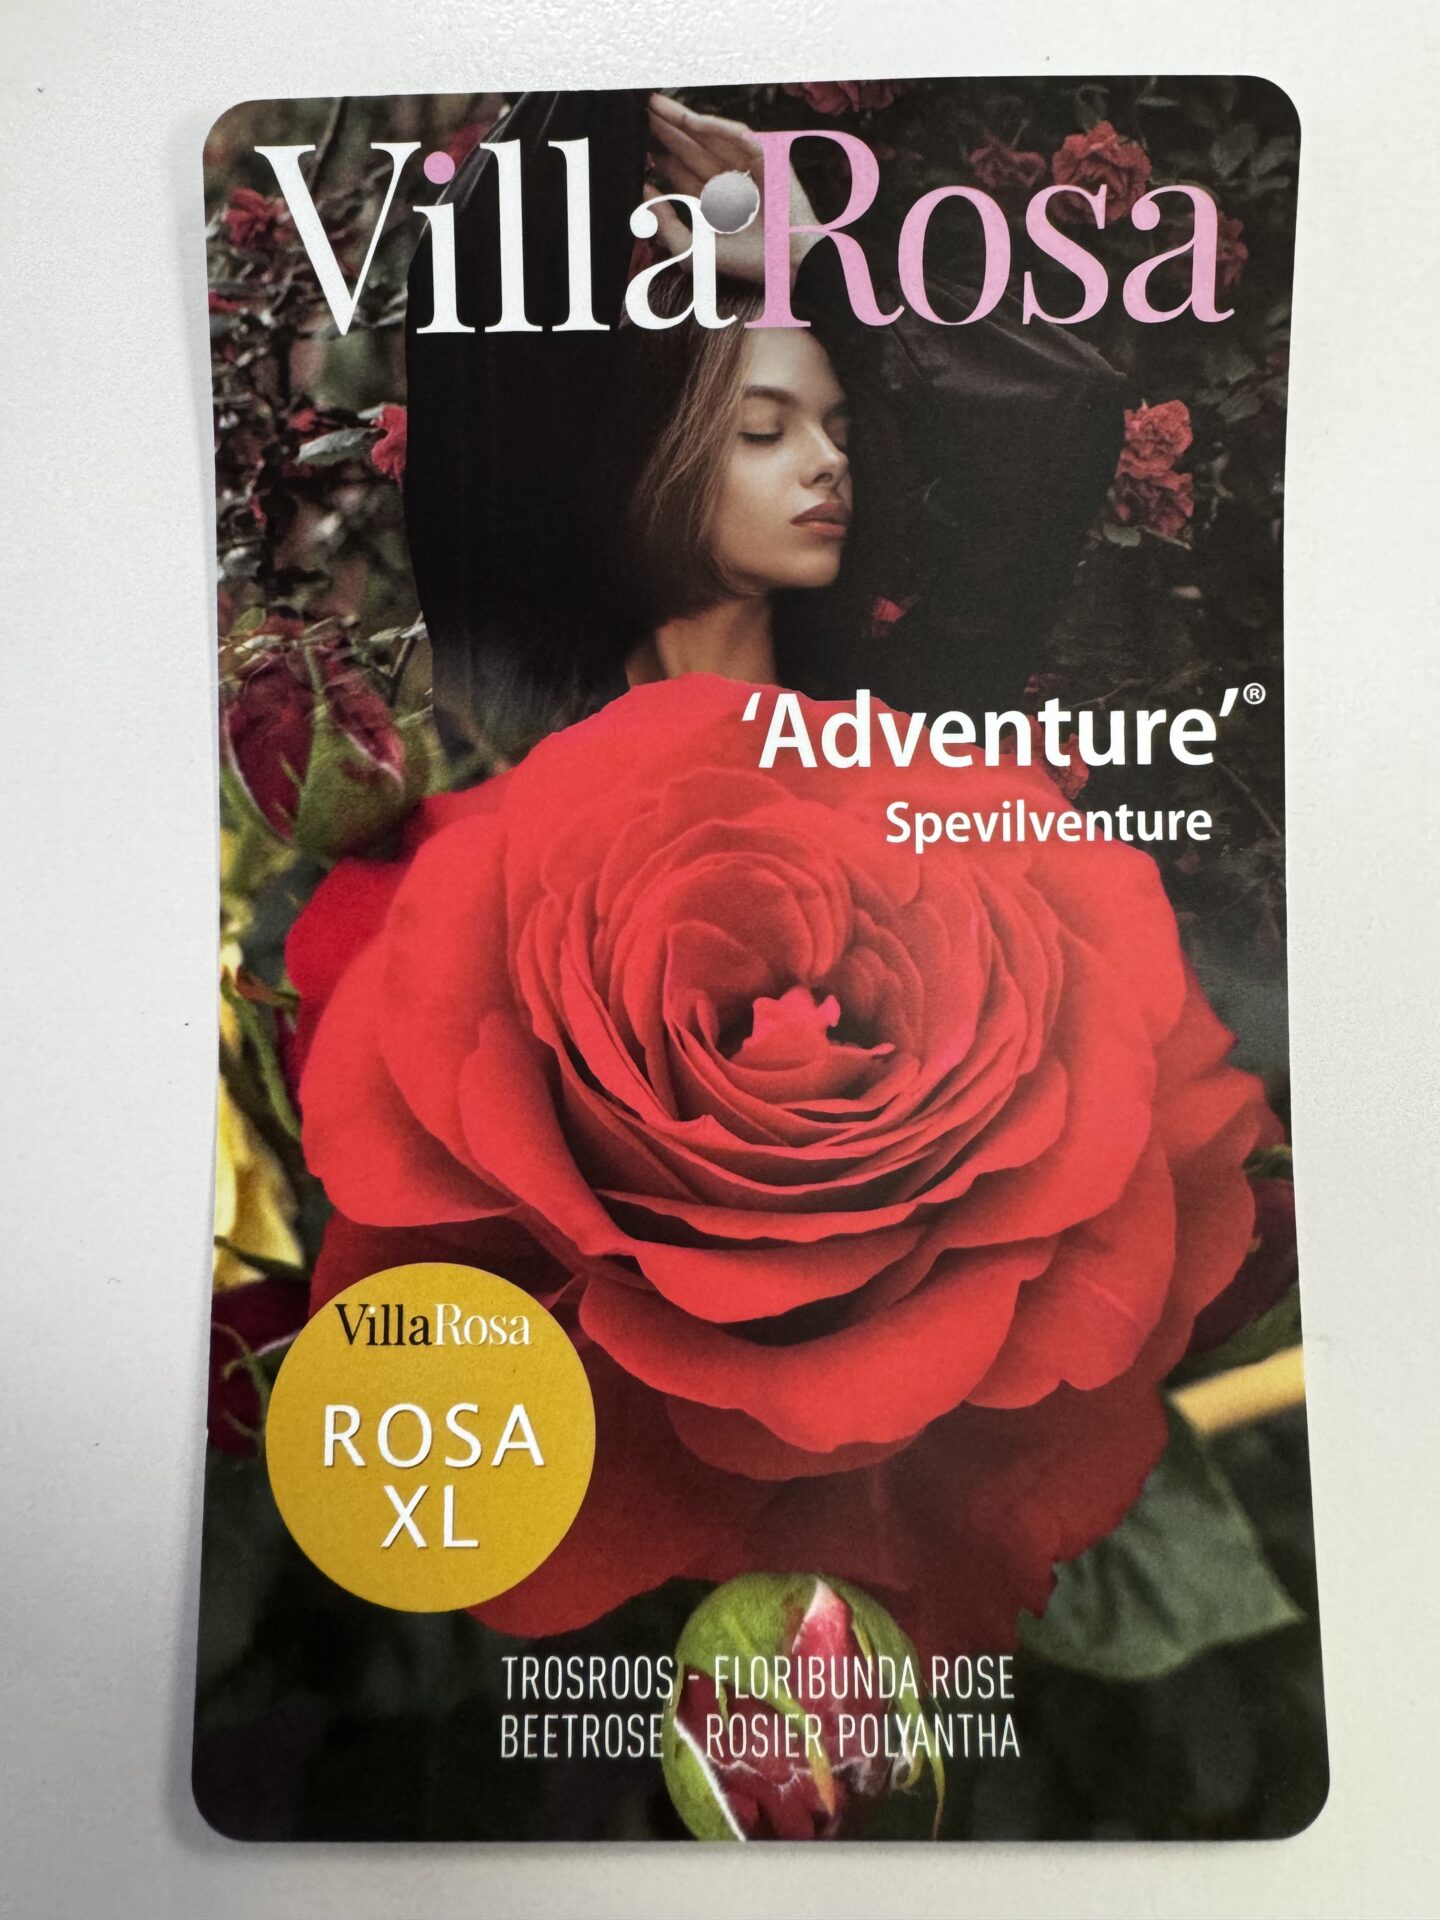 Villa Rosa “Adventure”®